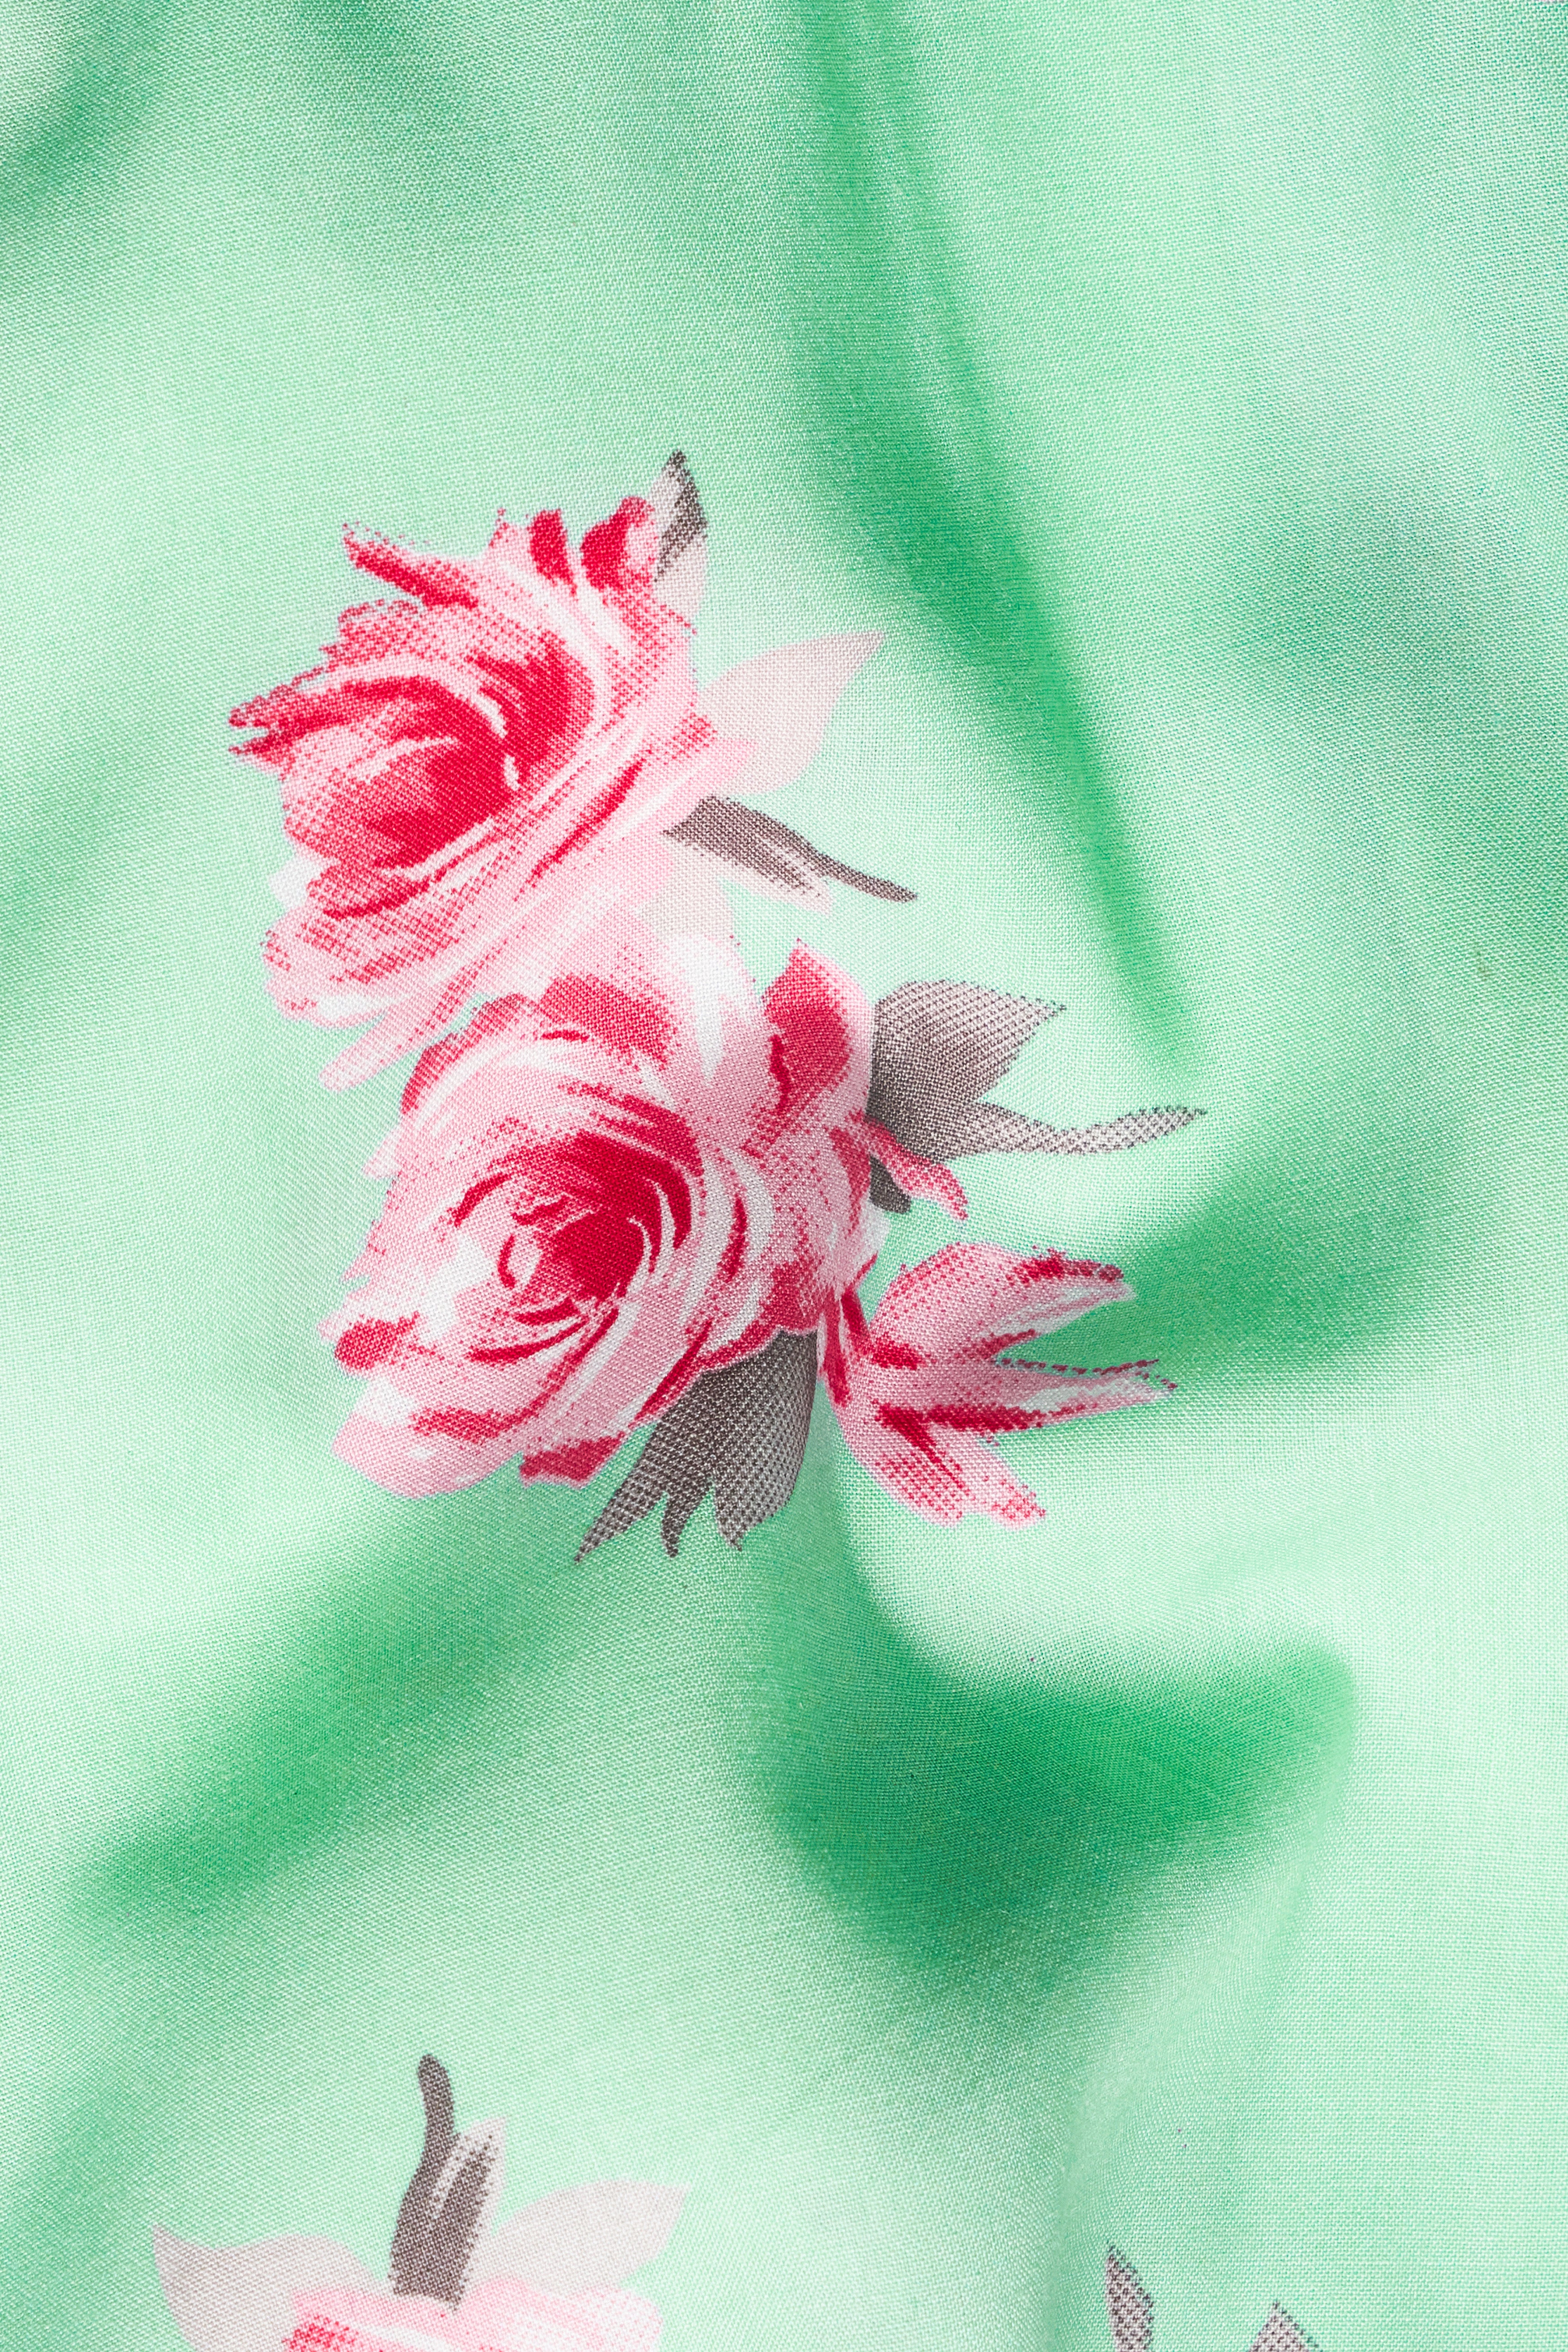 Turquoise Green Rose Flower Printed Premium Cotton Boxer BX560-28, BX560-30, BX560-32, BX560-34, BX560-36, BX560-38, BX560-40, BX560-42, BX560-44